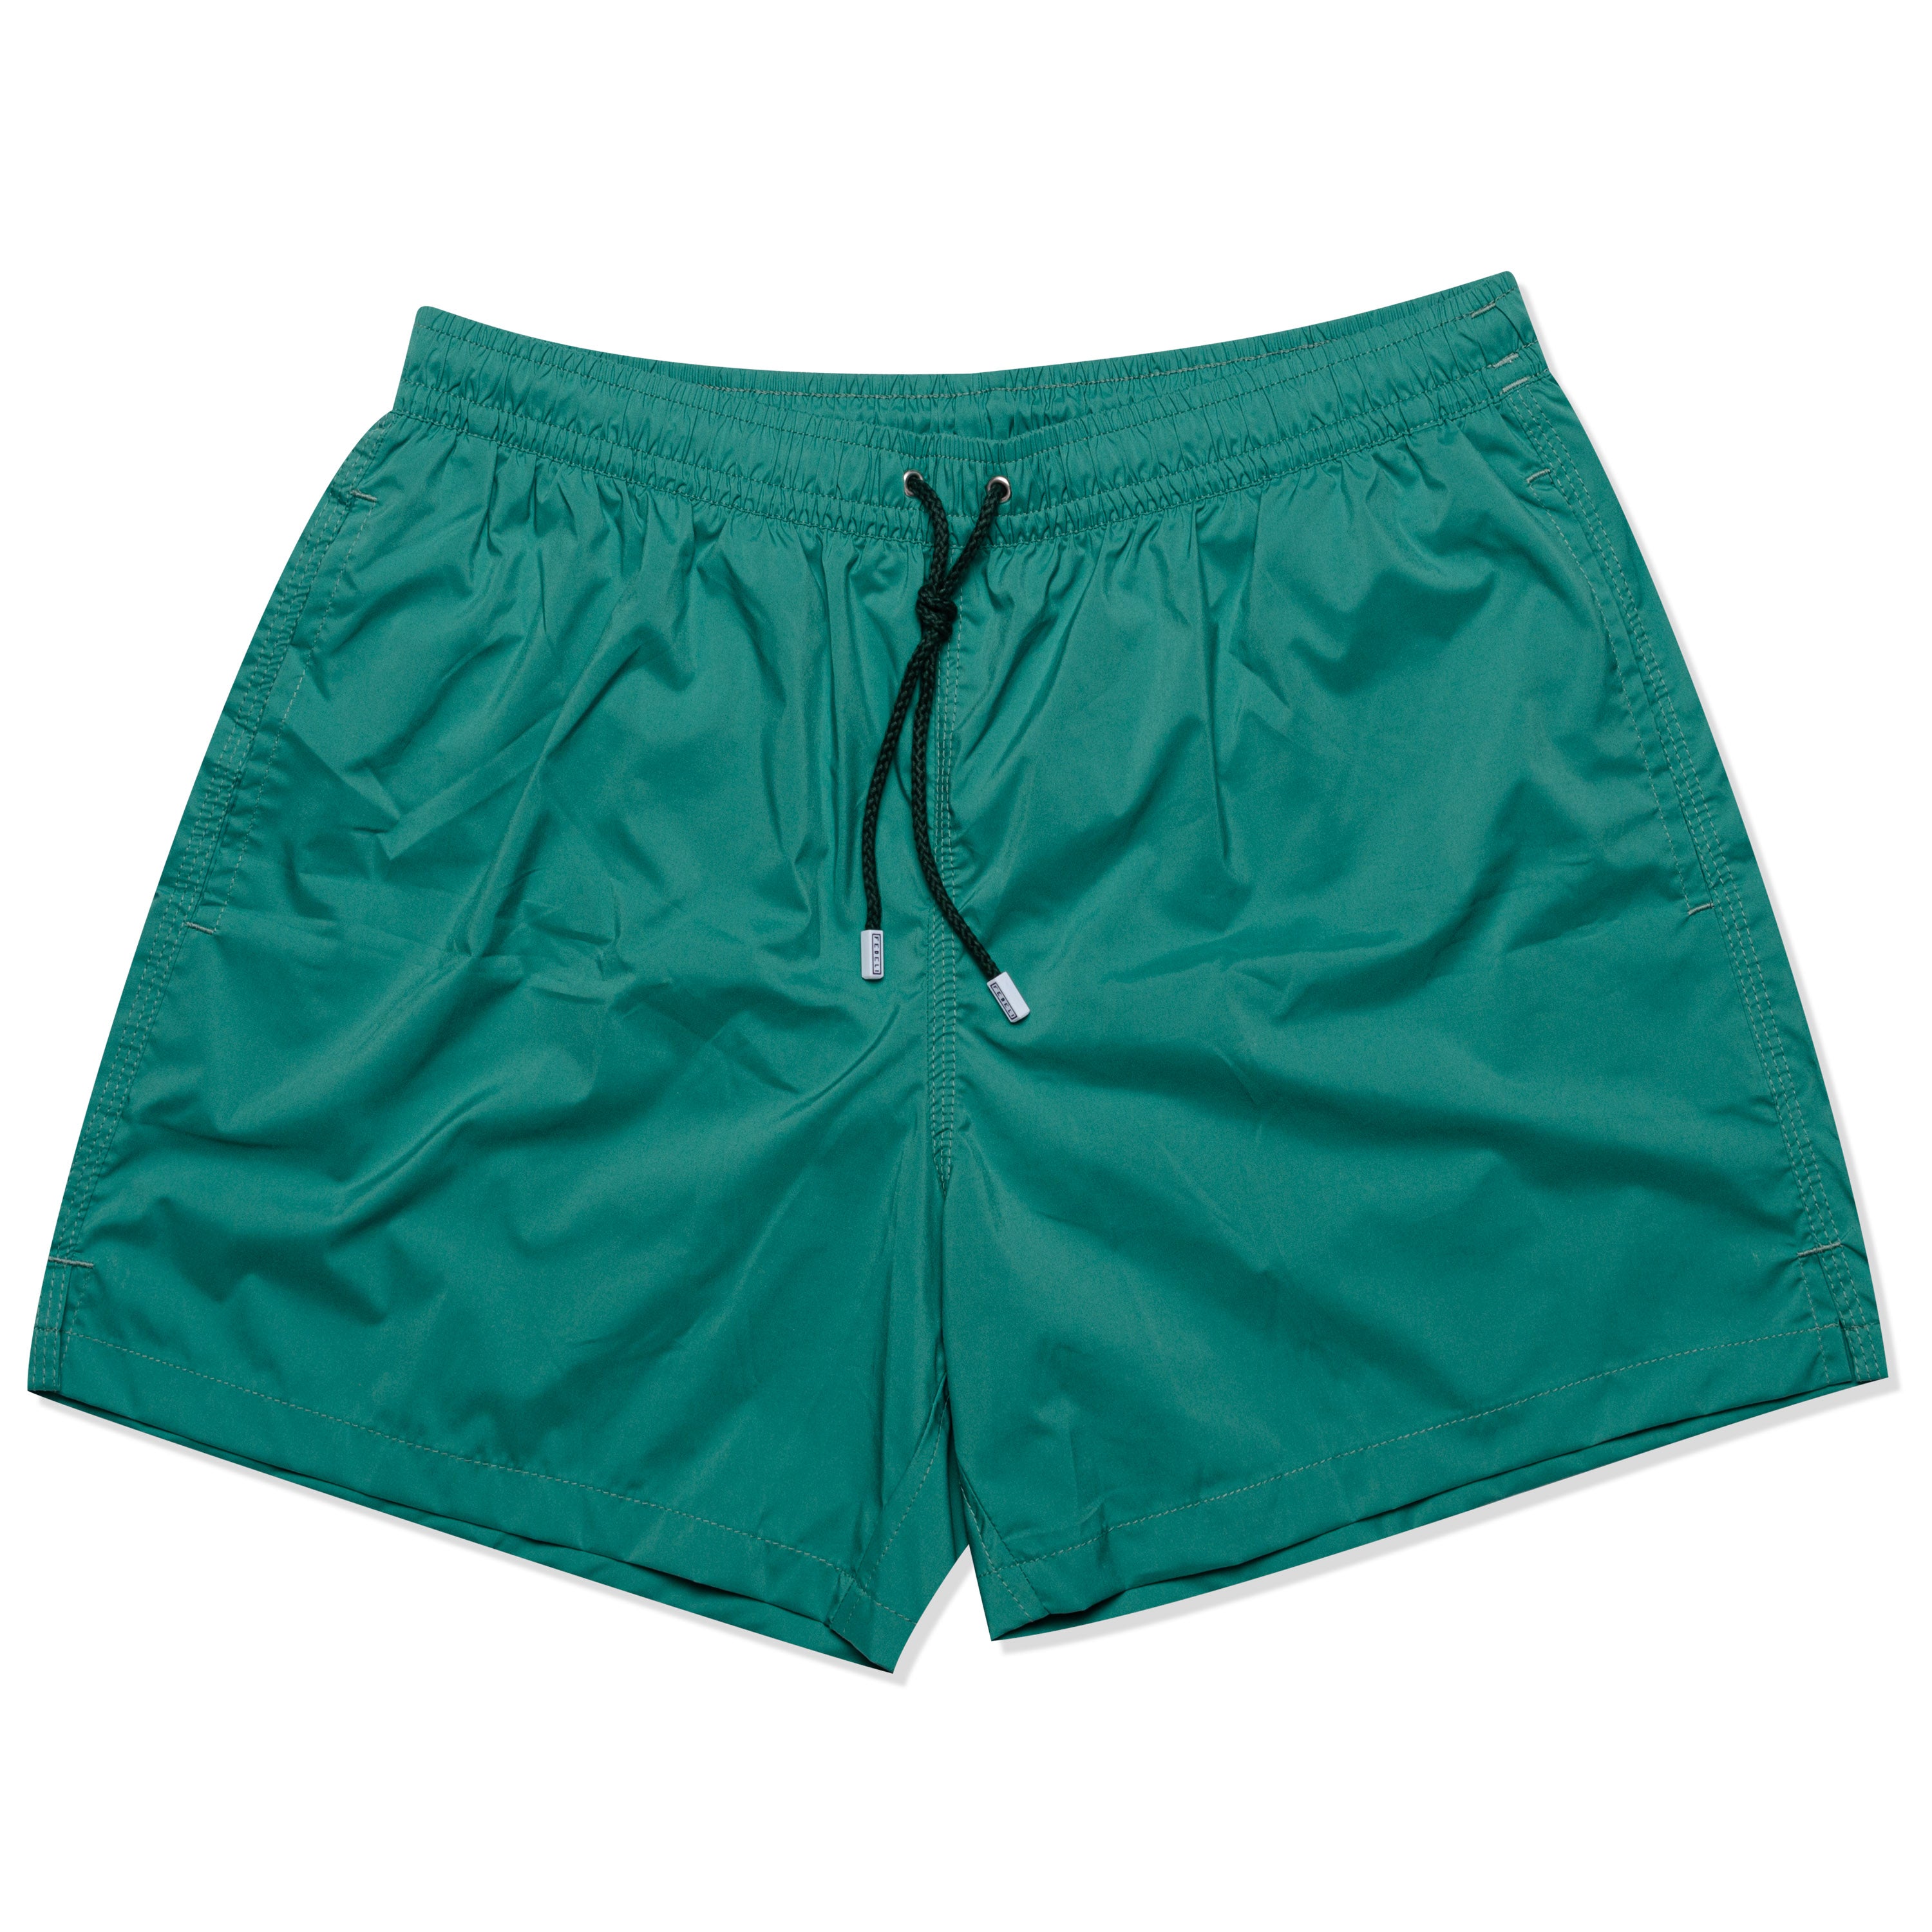 FEDELI Emerald Green Madeira Airstop Swim Shorts Trunks NEW Size 3XL FEDELI